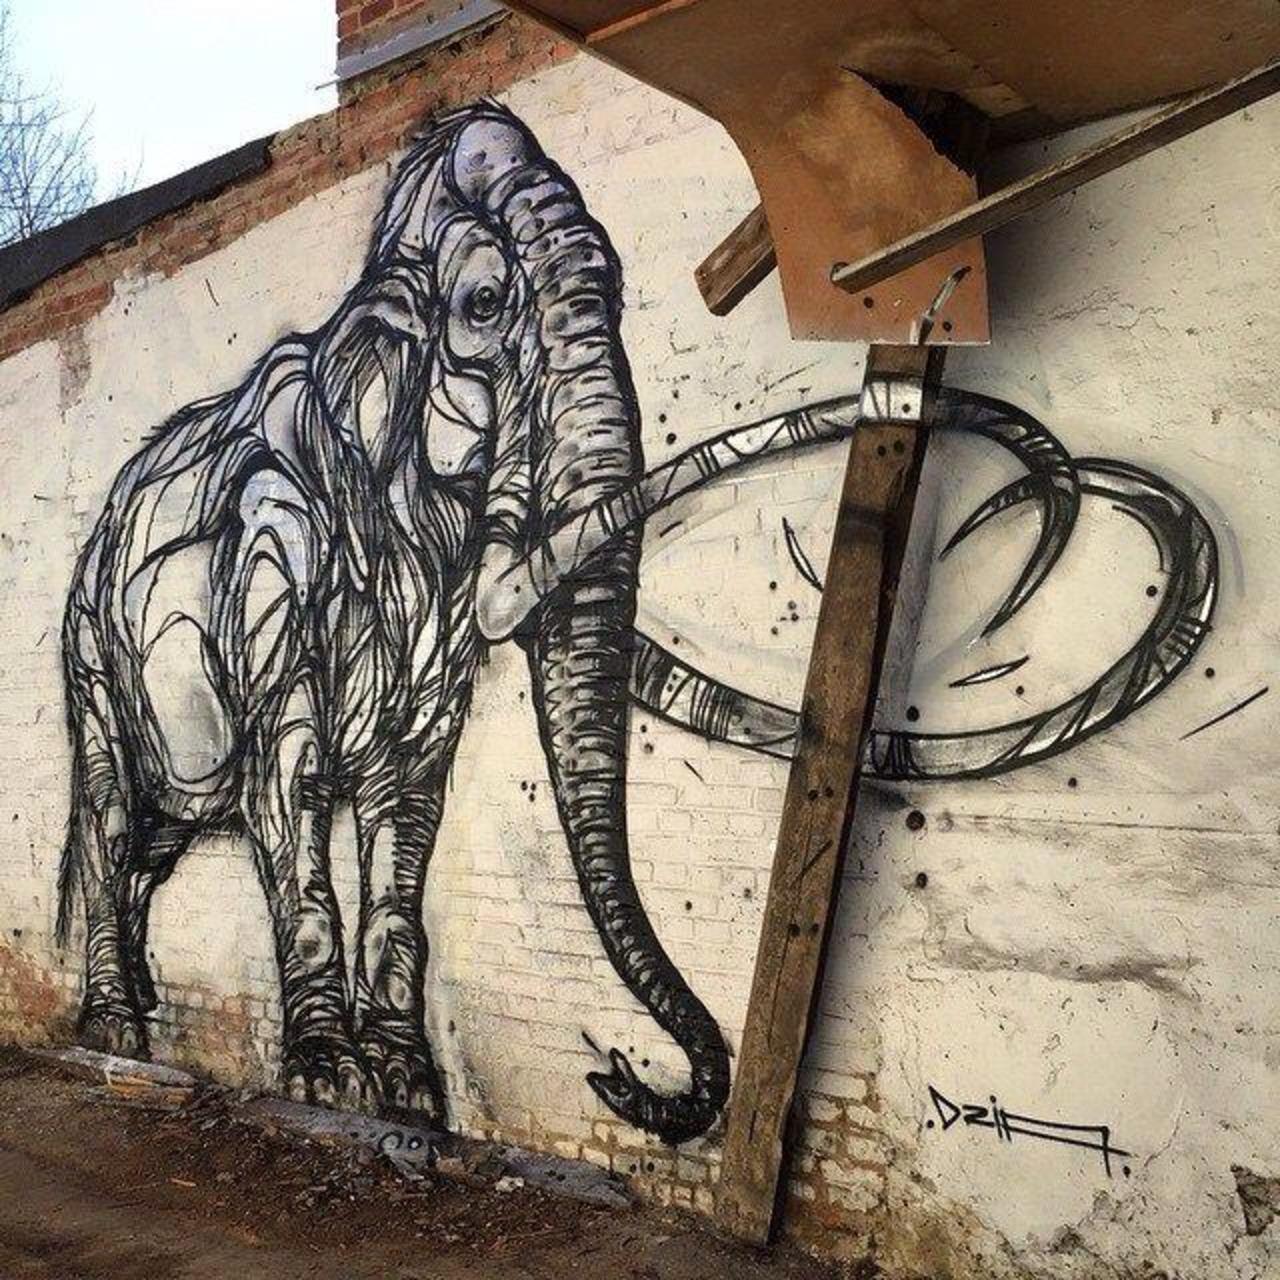 Mammoth. New nature in Street Art wall by DZIA 

#art #graffiti #mural #streetart http://t.co/3jAlsTbKBI